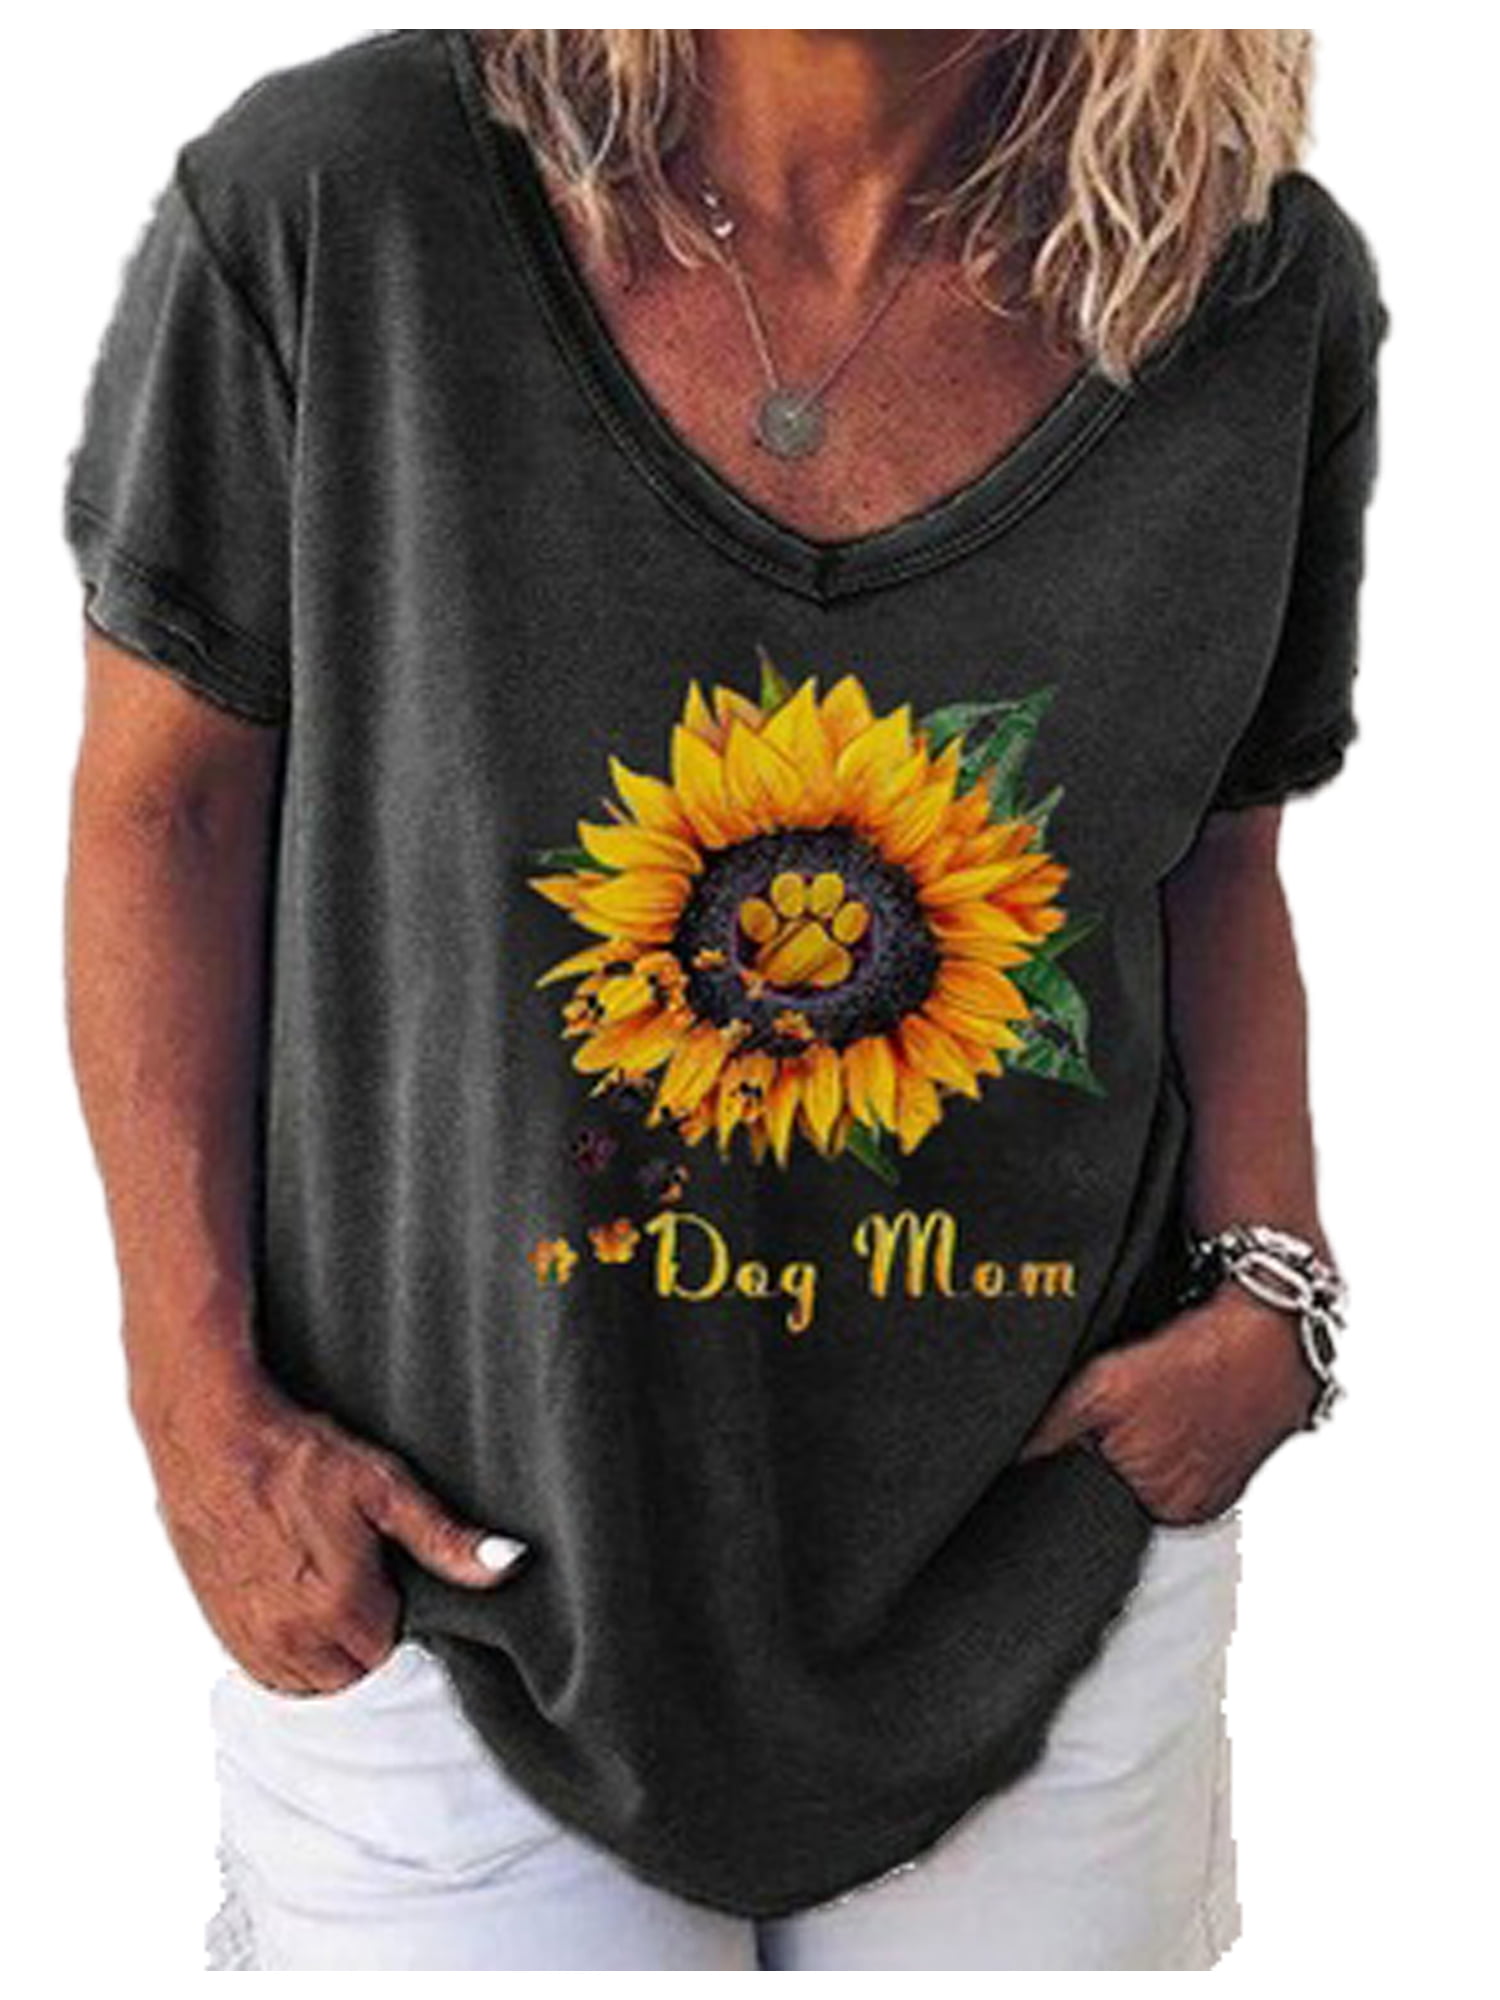 Juner Womens Fashion Off Shoulder Sunflower Print Sweatshirt Causal Blouses Long Sleeve Top